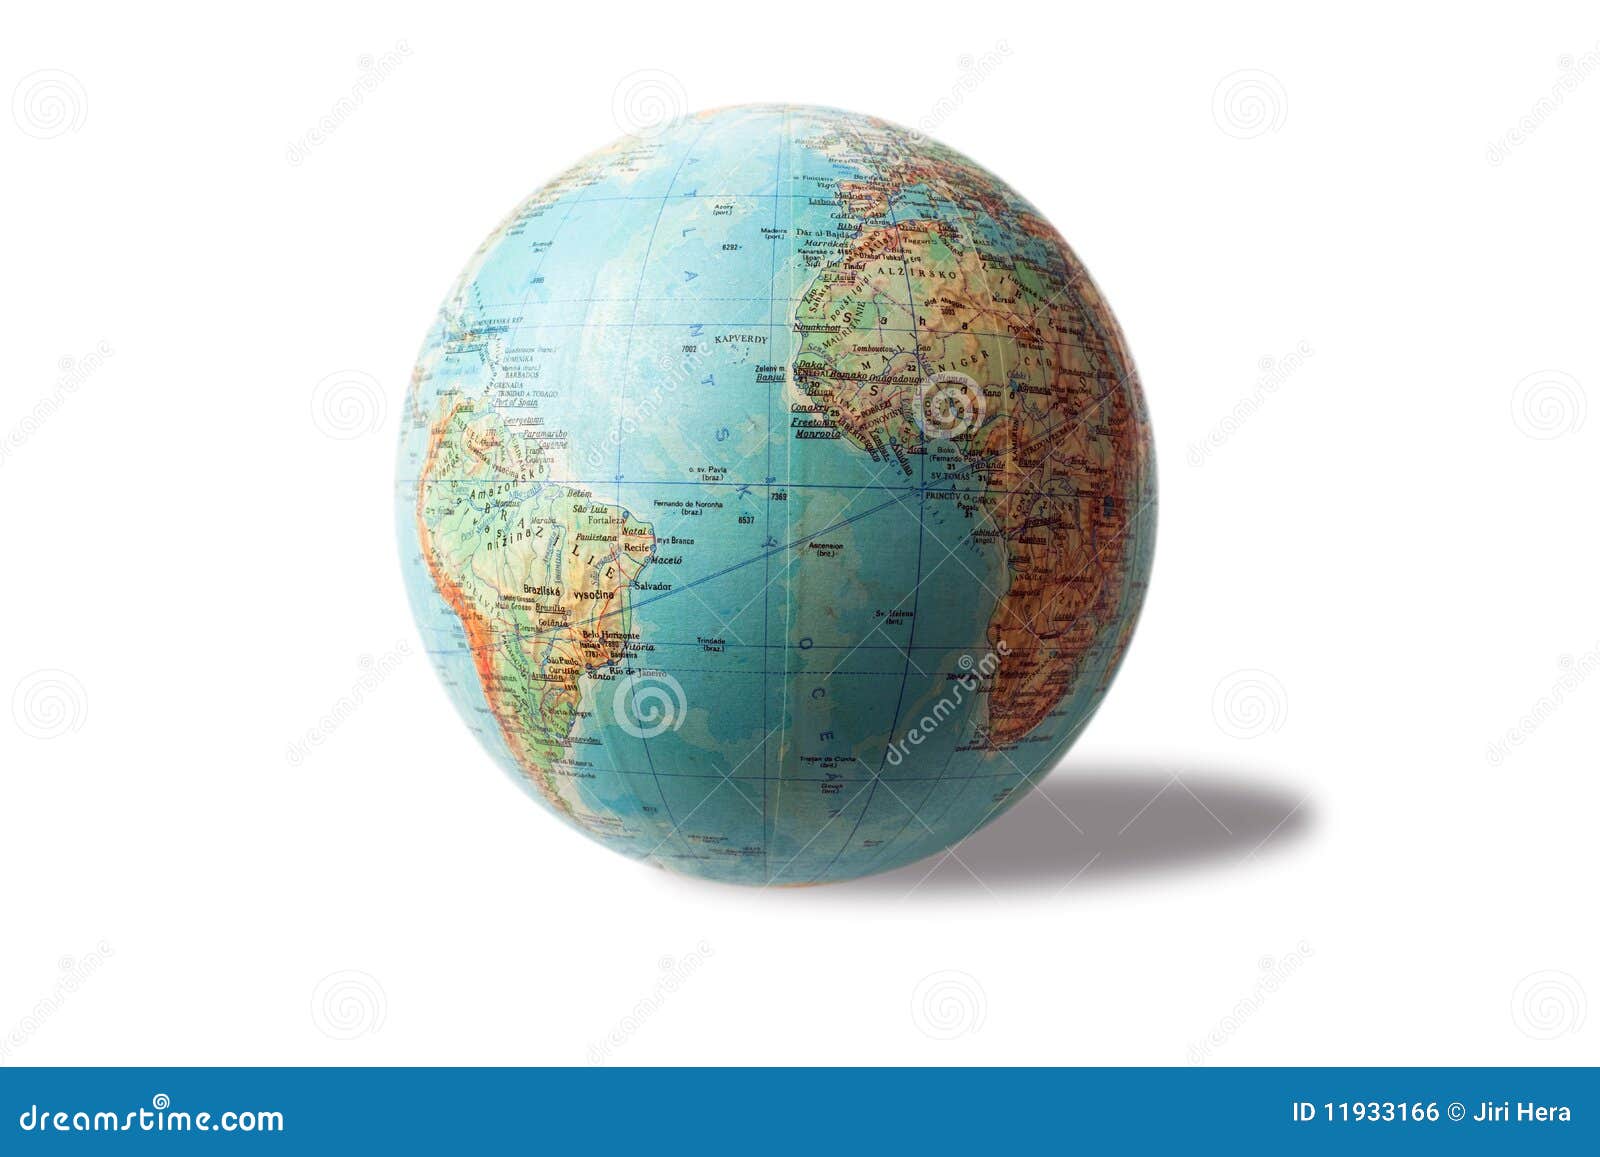 terrestrial globe